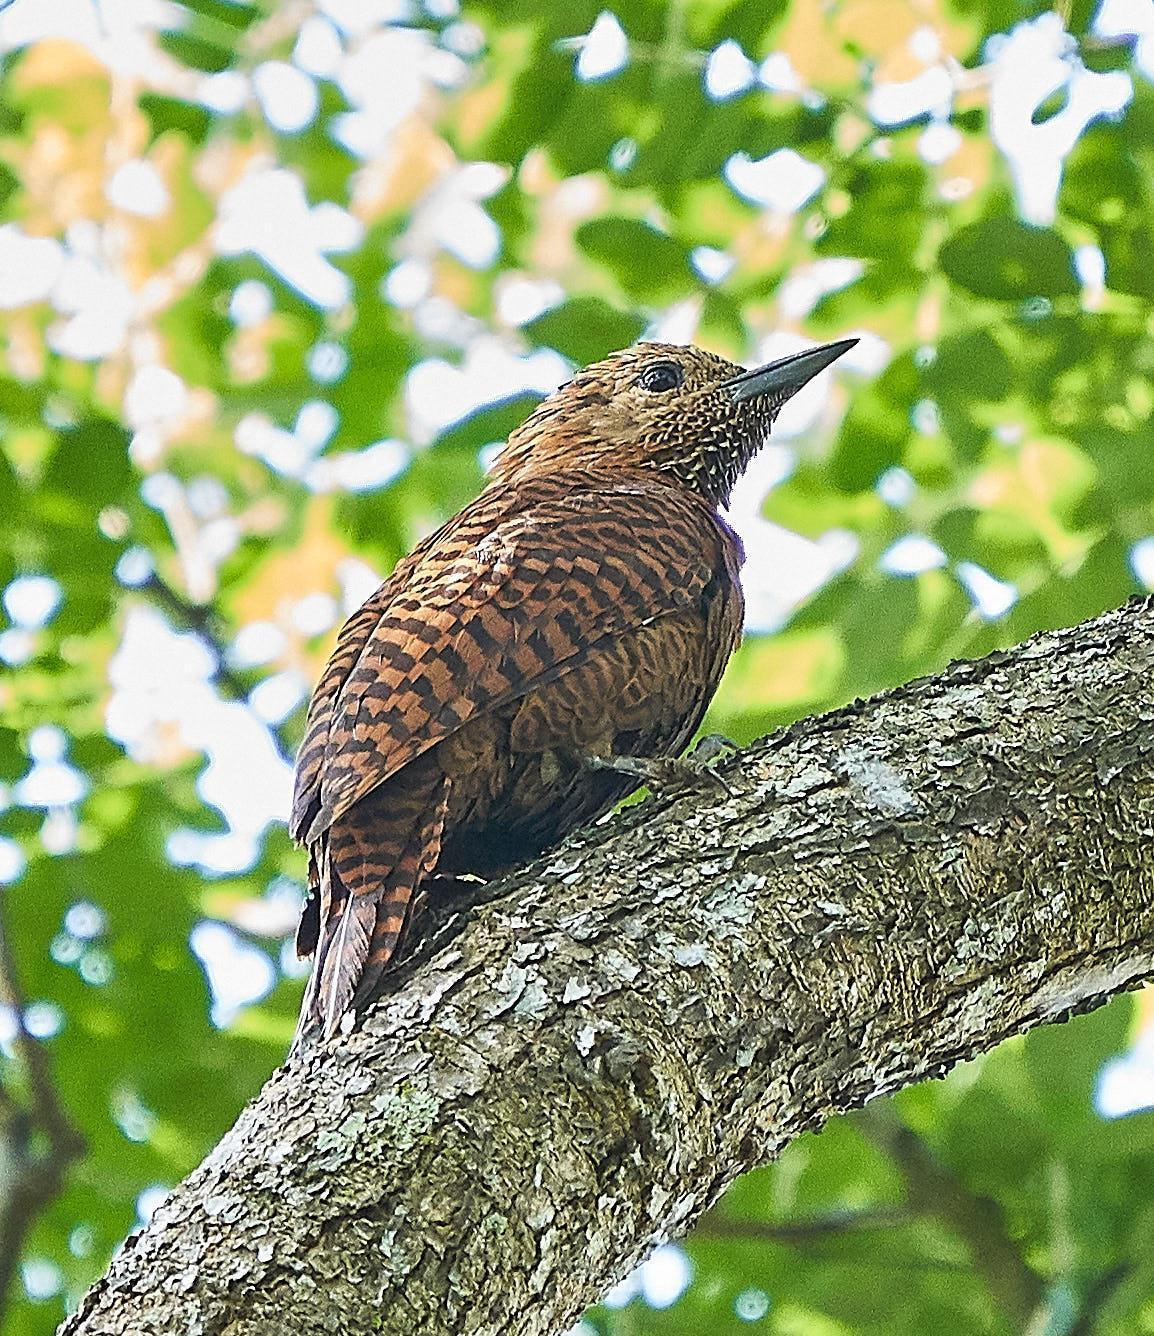 Rufous Woodpecker Photo by Steven Cheong